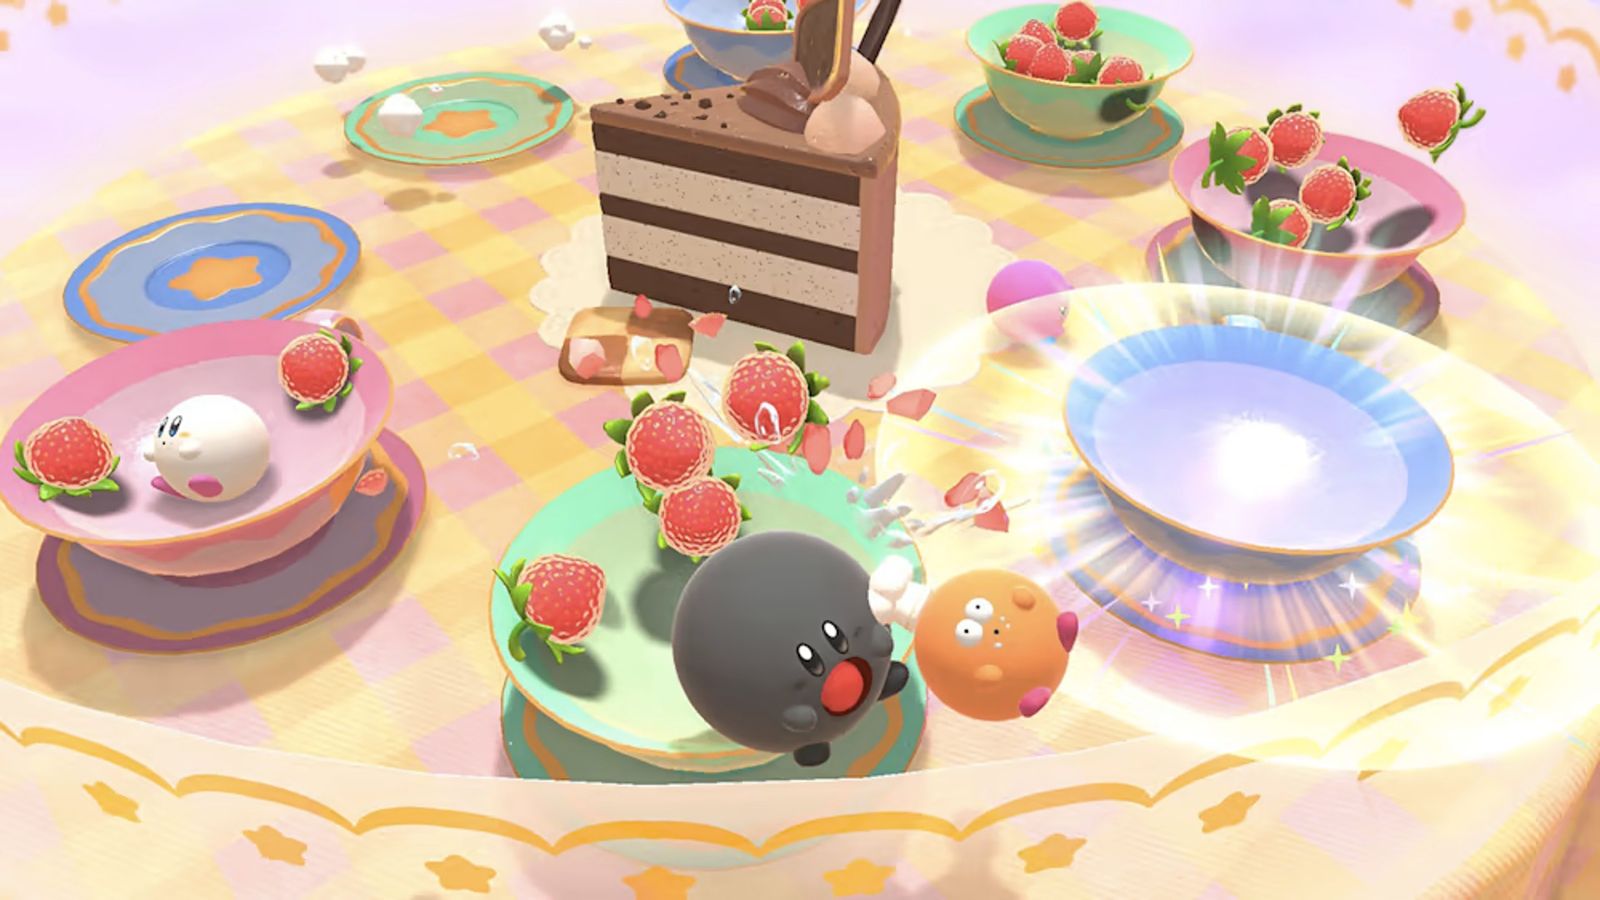 Image of a match in progress in Kirby's Dream Buffet.